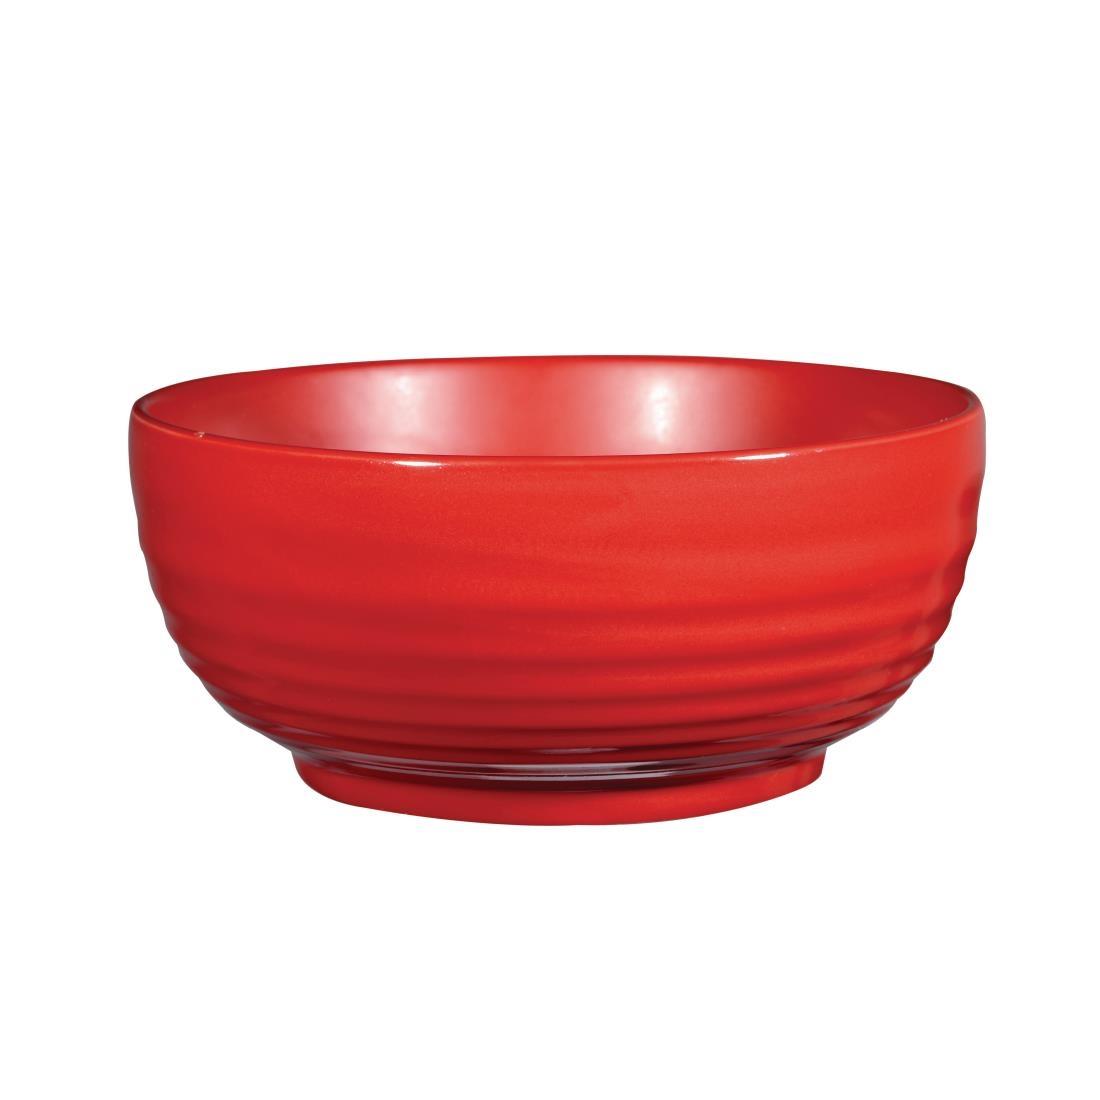 Art de Cuisine Red Glaze Ripple Bowls Large (Pack of 4) - GF706  - 1